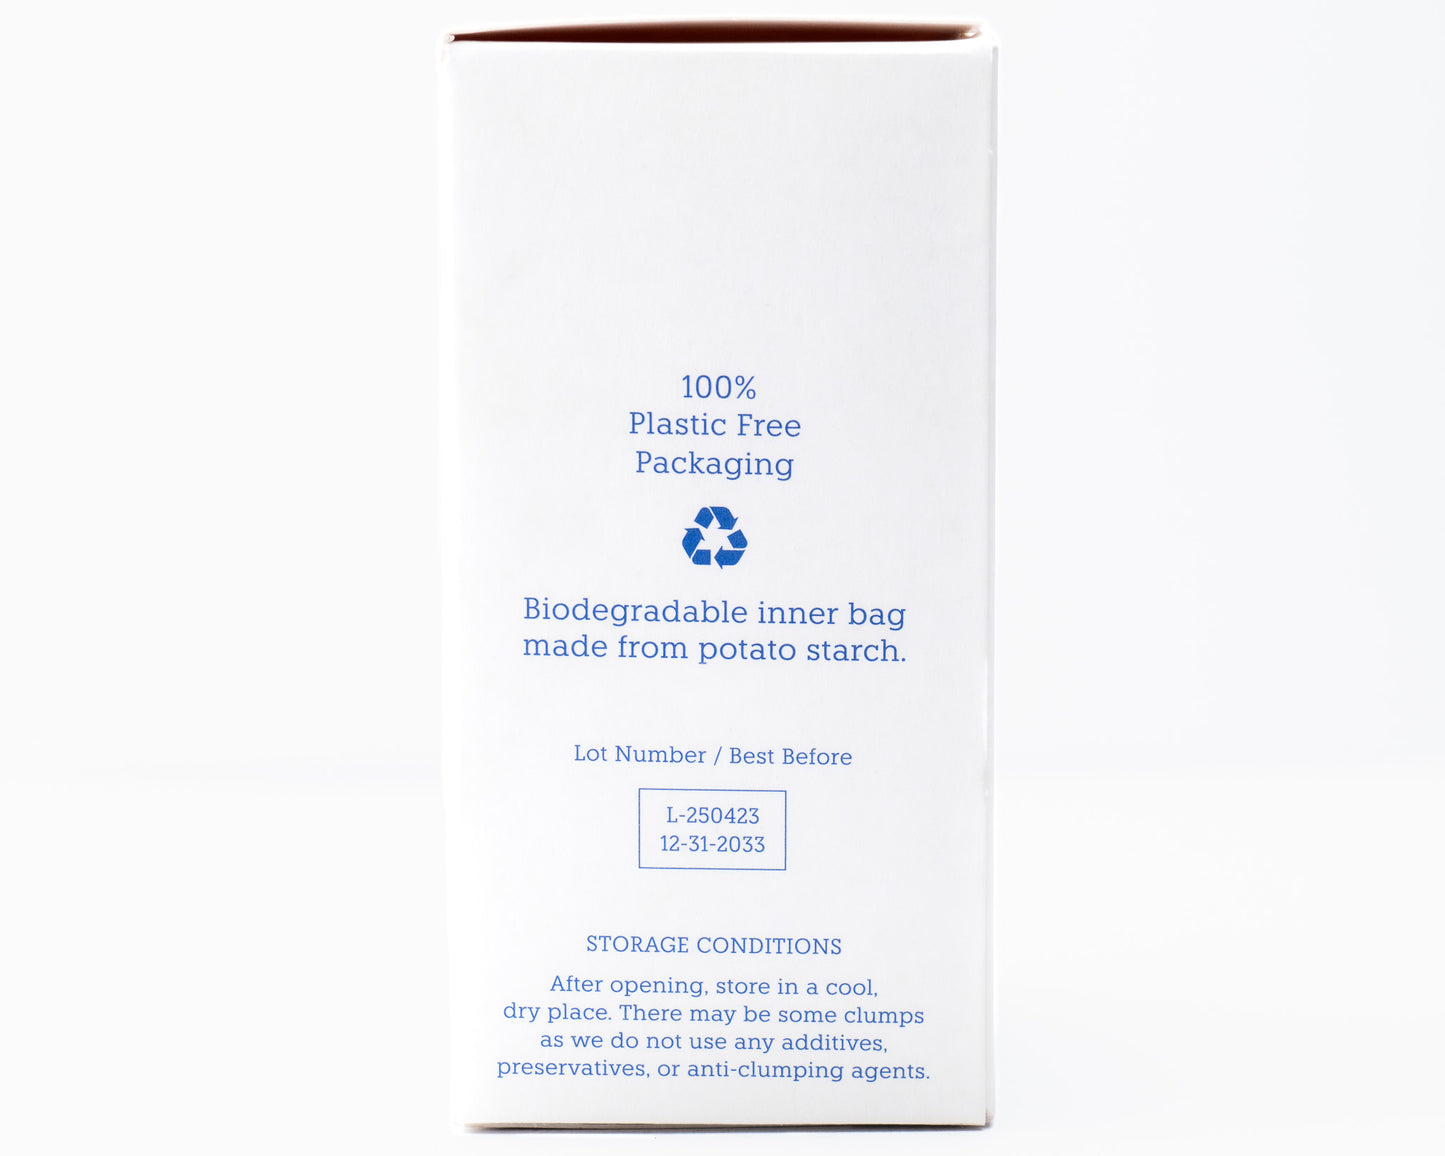 Fine Pure Natural Spring Salt (300g) - Microplastic Free